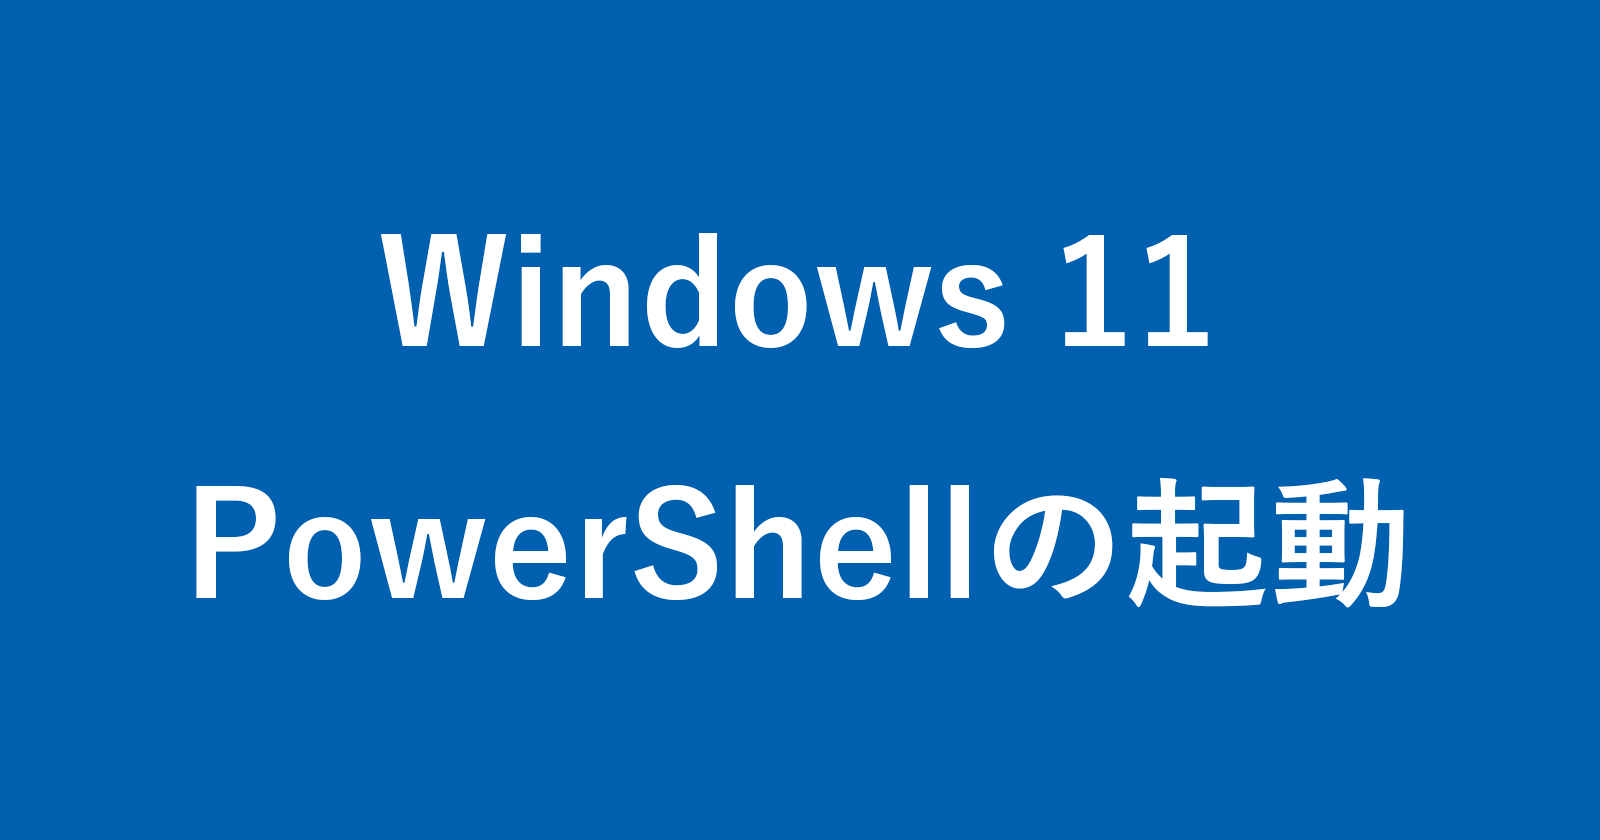 windows 11 open powershell